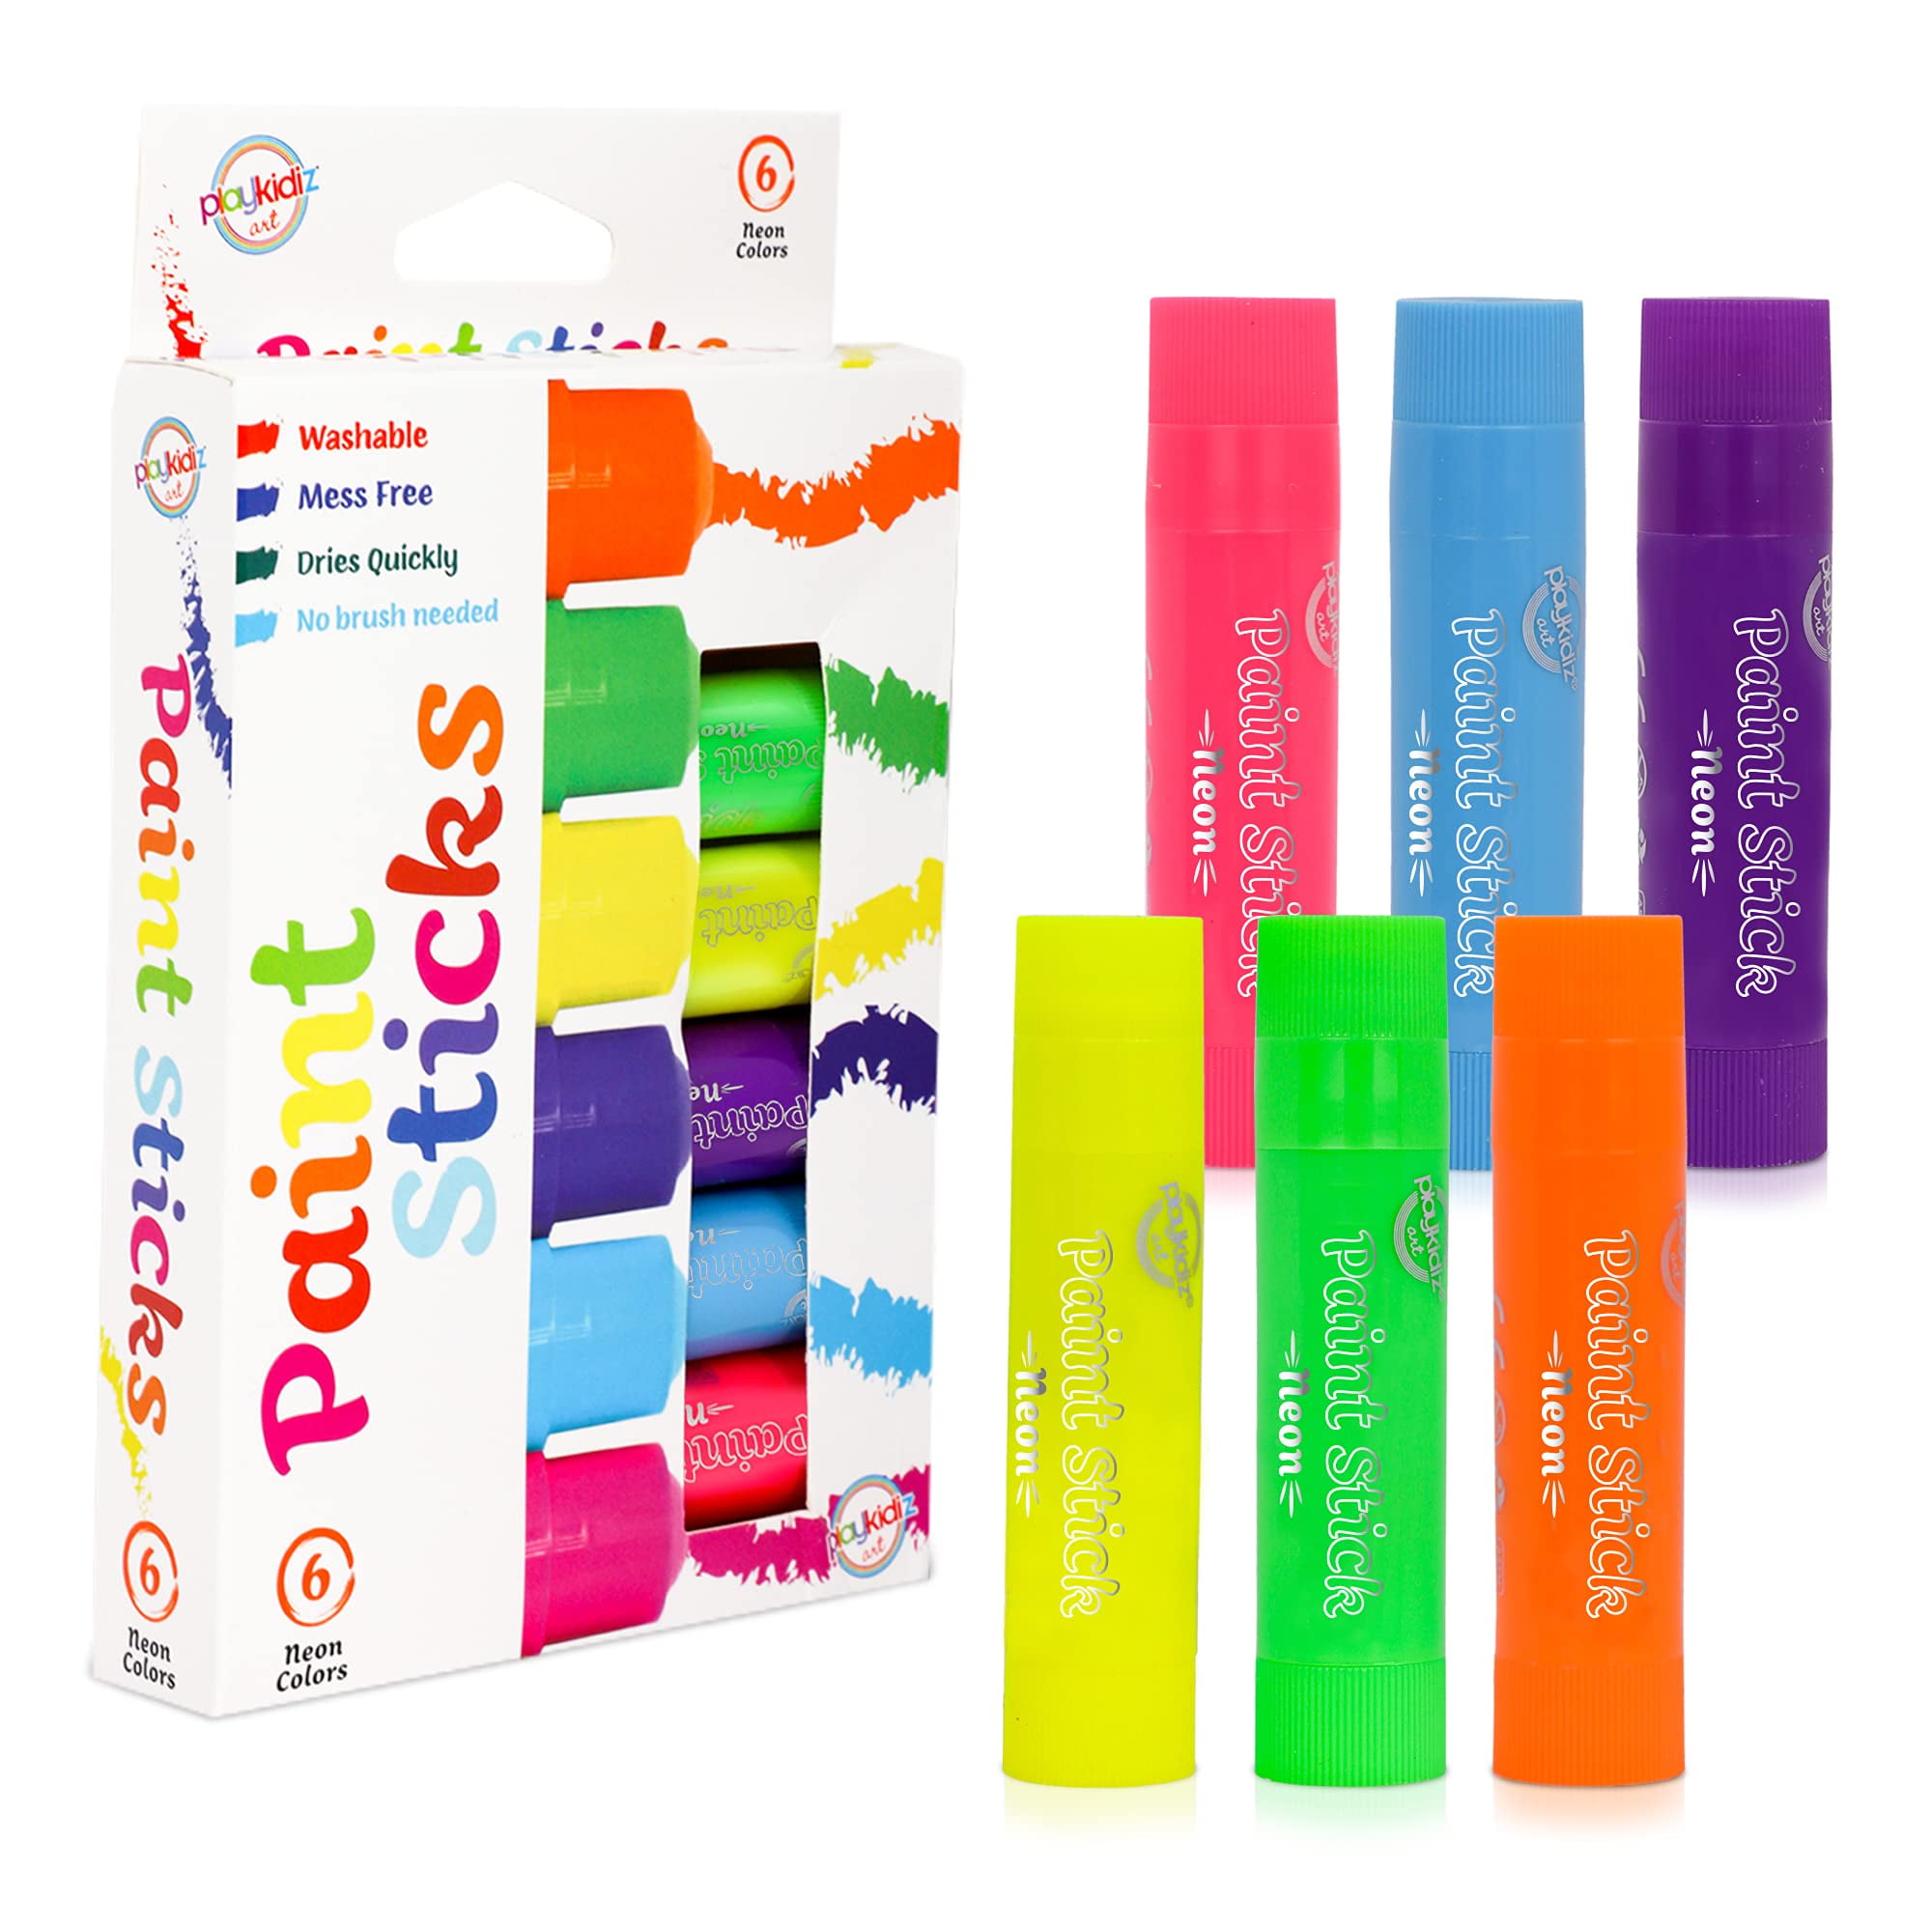 Kwik Stix Solid Tempera Paint Sticks 6 colors Neon